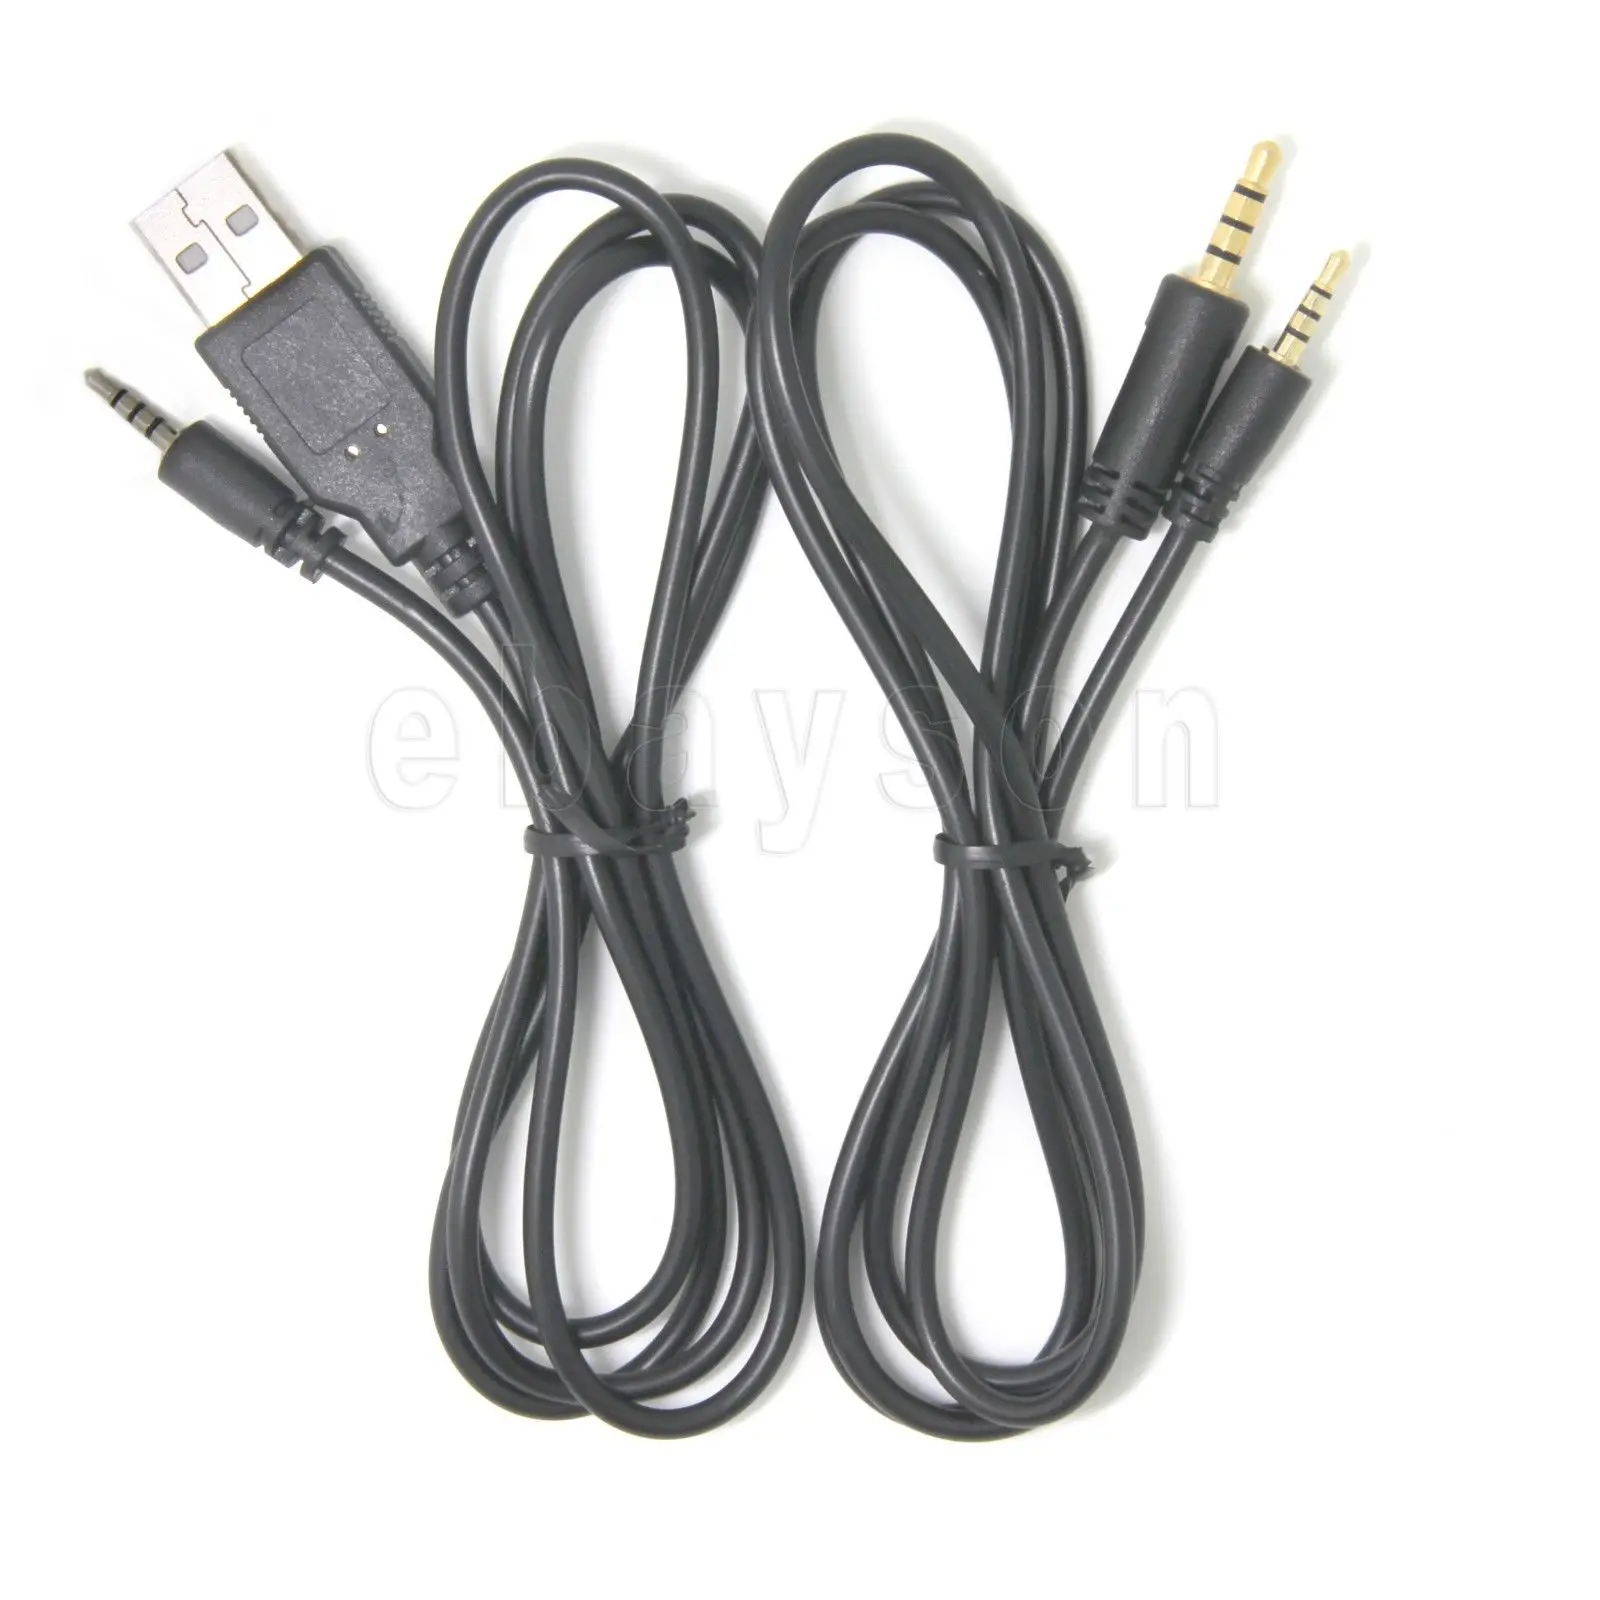 Synchros E40bt/e50bt/j56bt Headphones Usb Charge & Audio Cable - Data - AliExpress